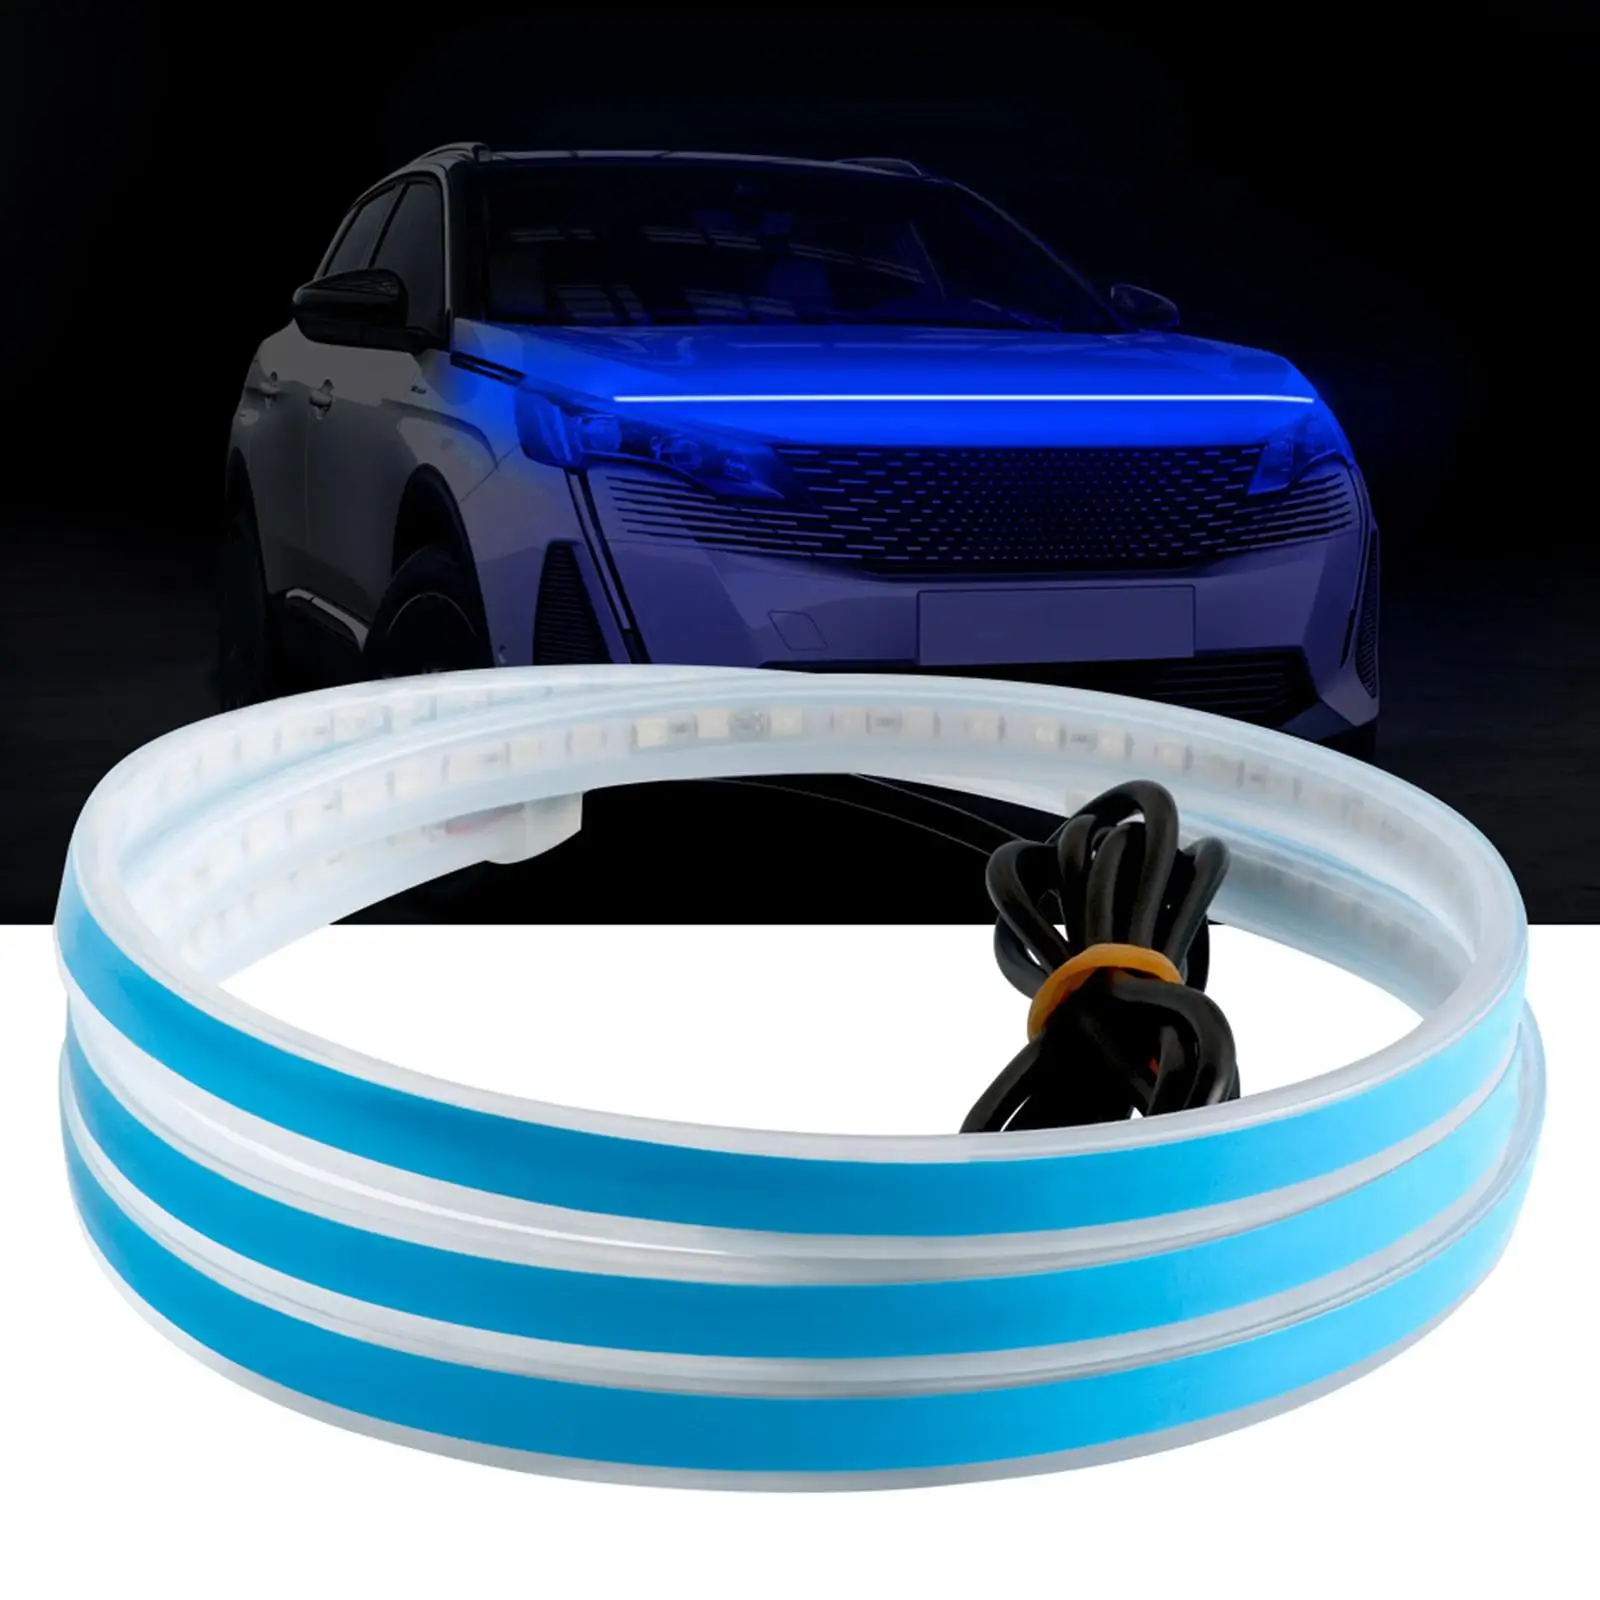 LED Strip Light for Hood Flexible Exterior Daytime Running Light Universal 12V Car Hood Strip Light for Car Accessories Parts